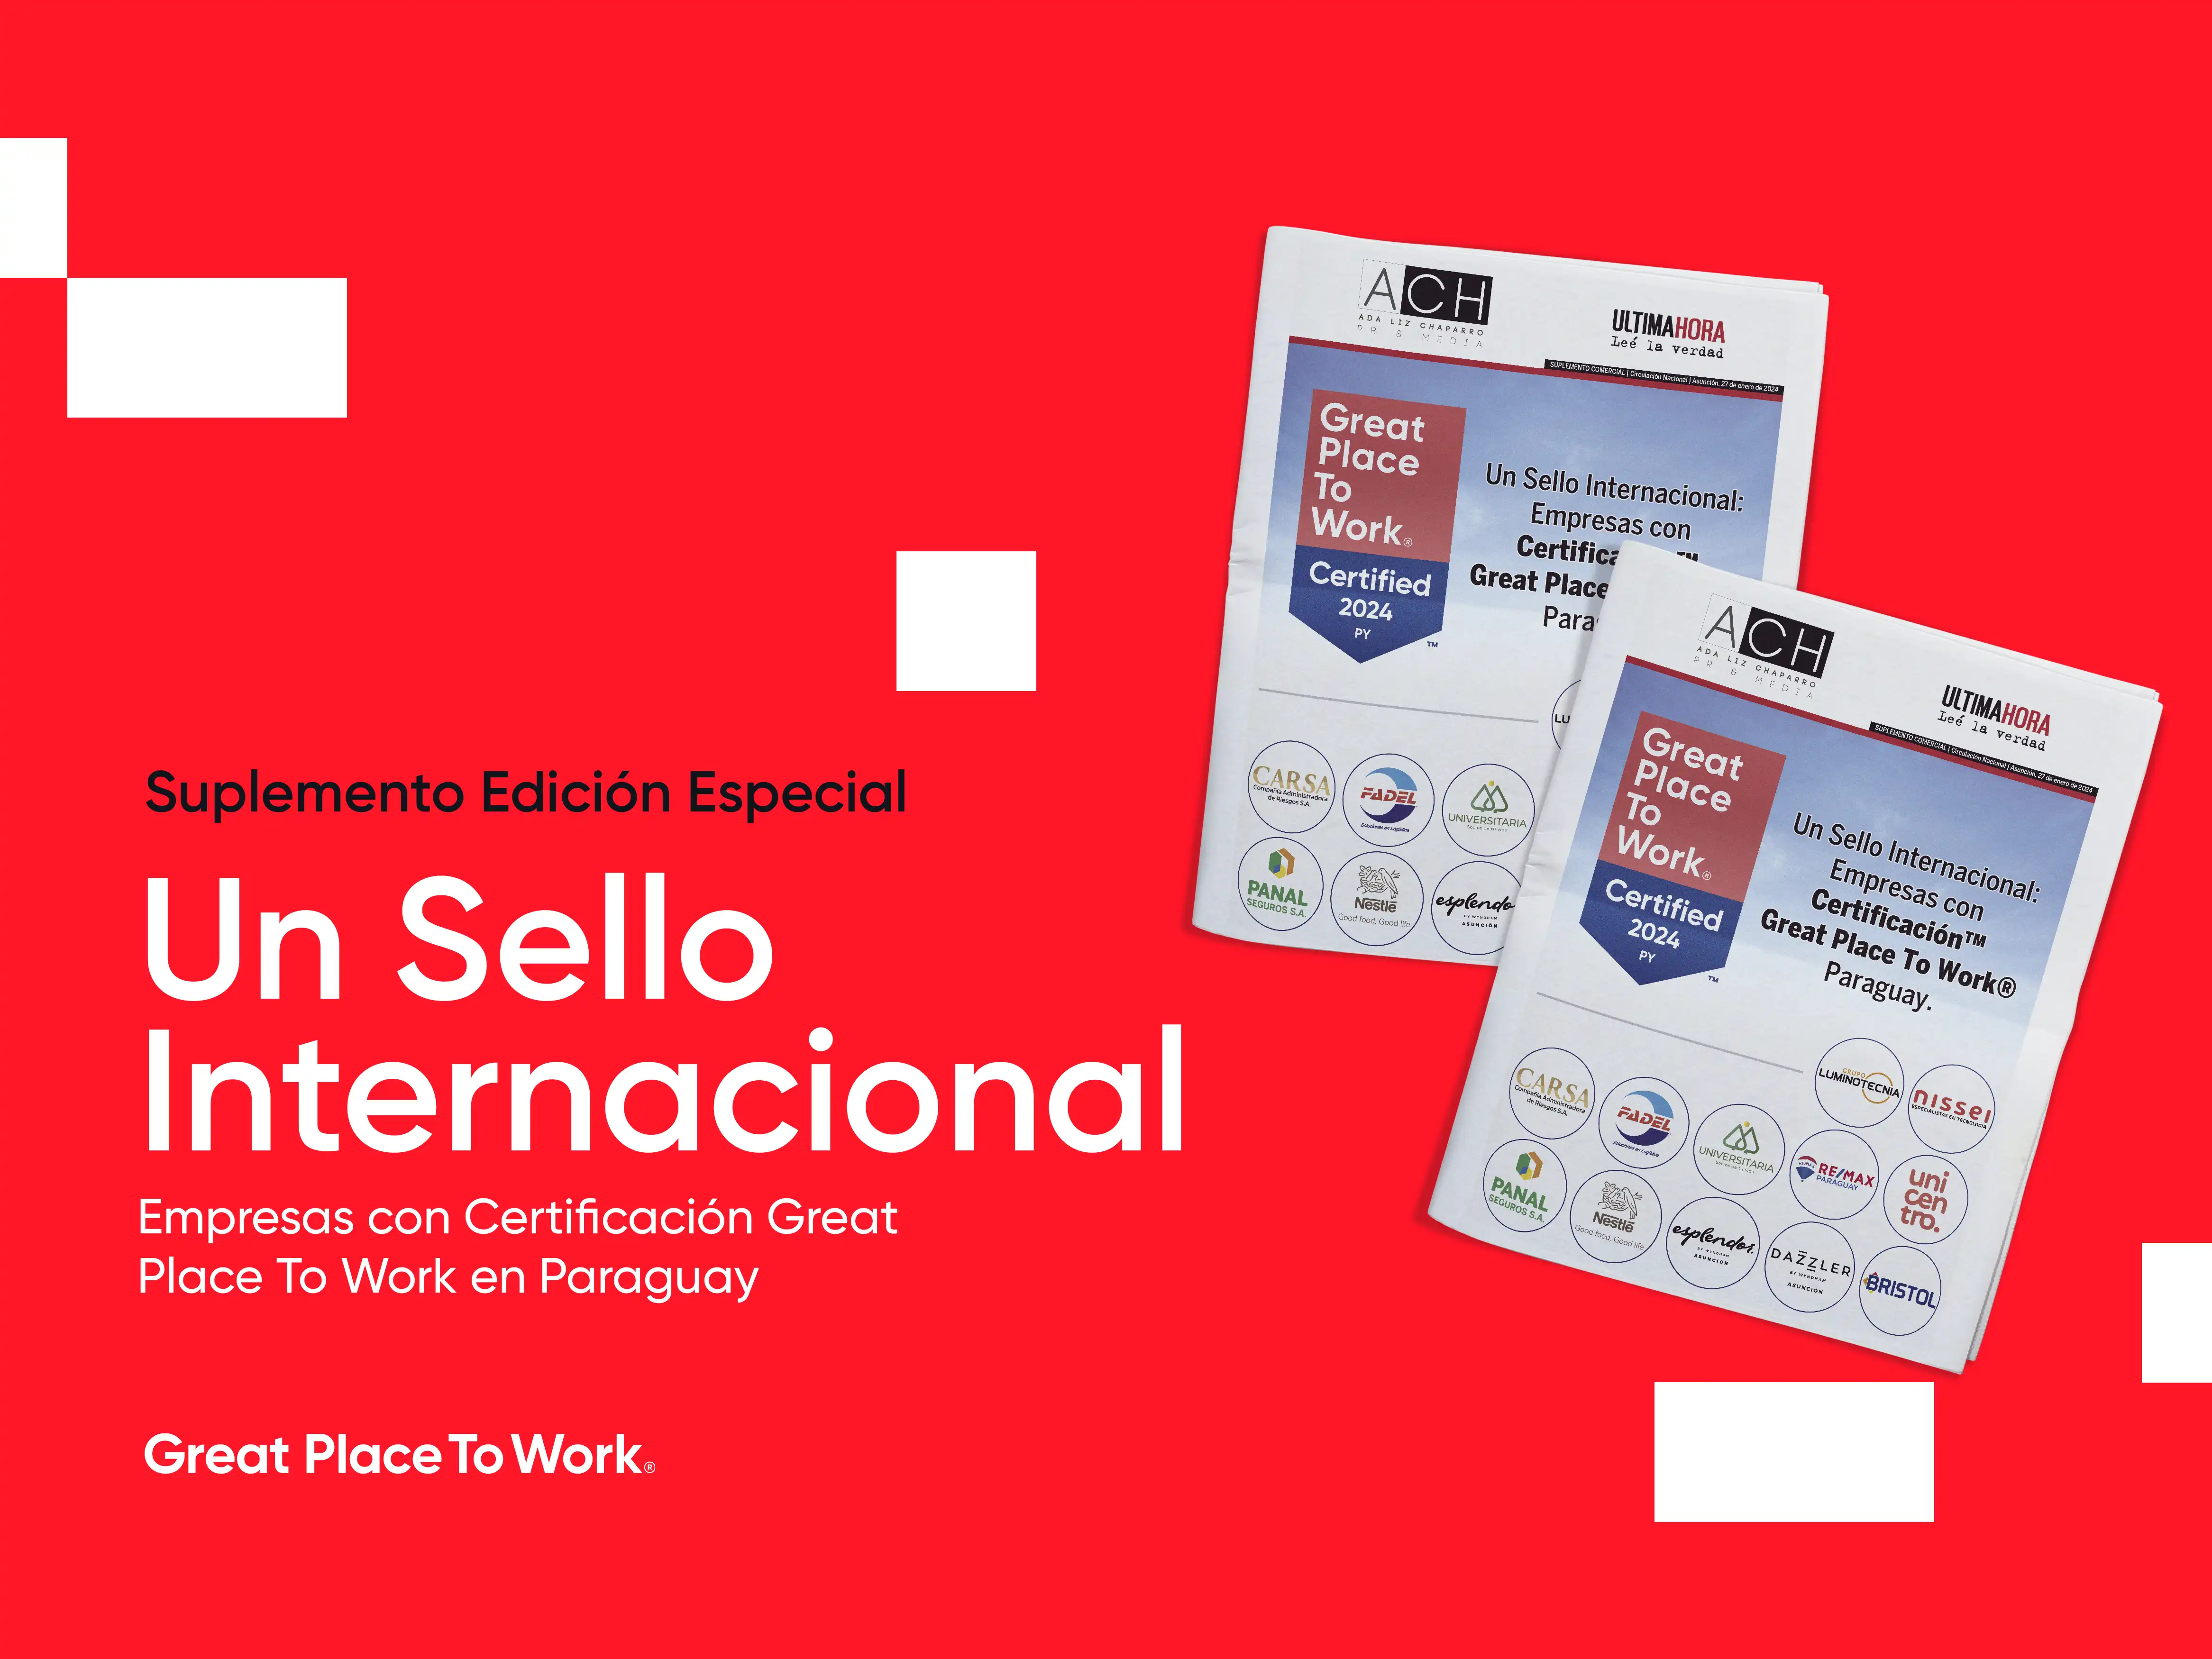 Un Sello Internacional: Empresas con Certificación de Great Place To Work en Paraguay